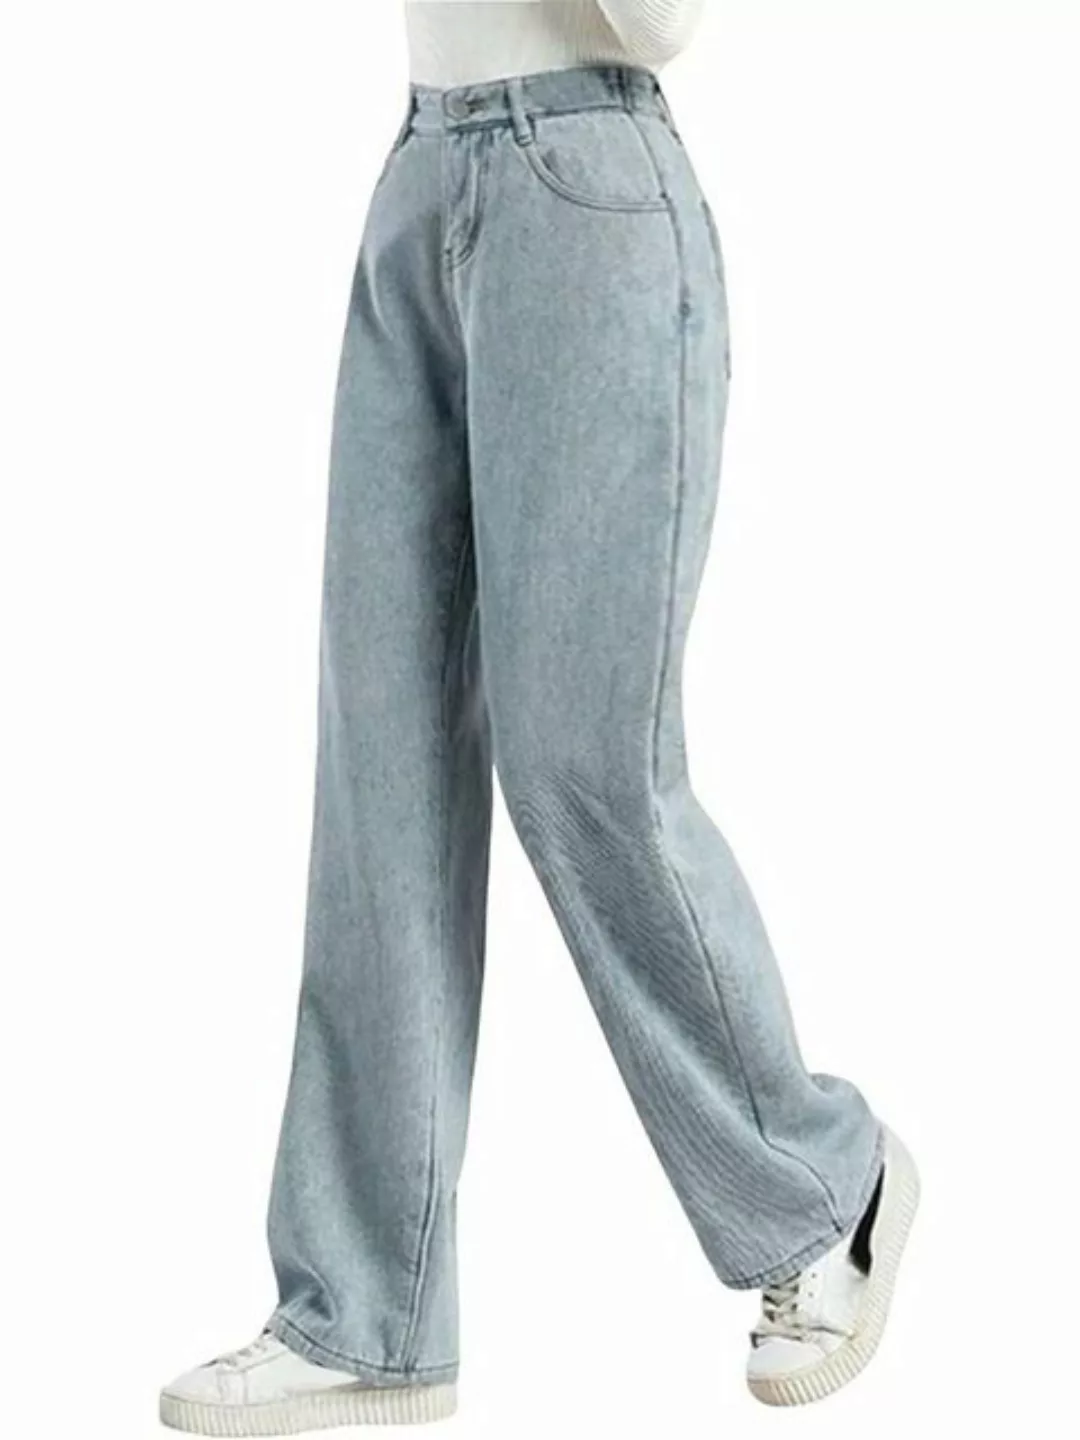 FIDDY Loungehose Damen Jeans Winter verdickte Strumpfhosen Leggings Slim Fi günstig online kaufen